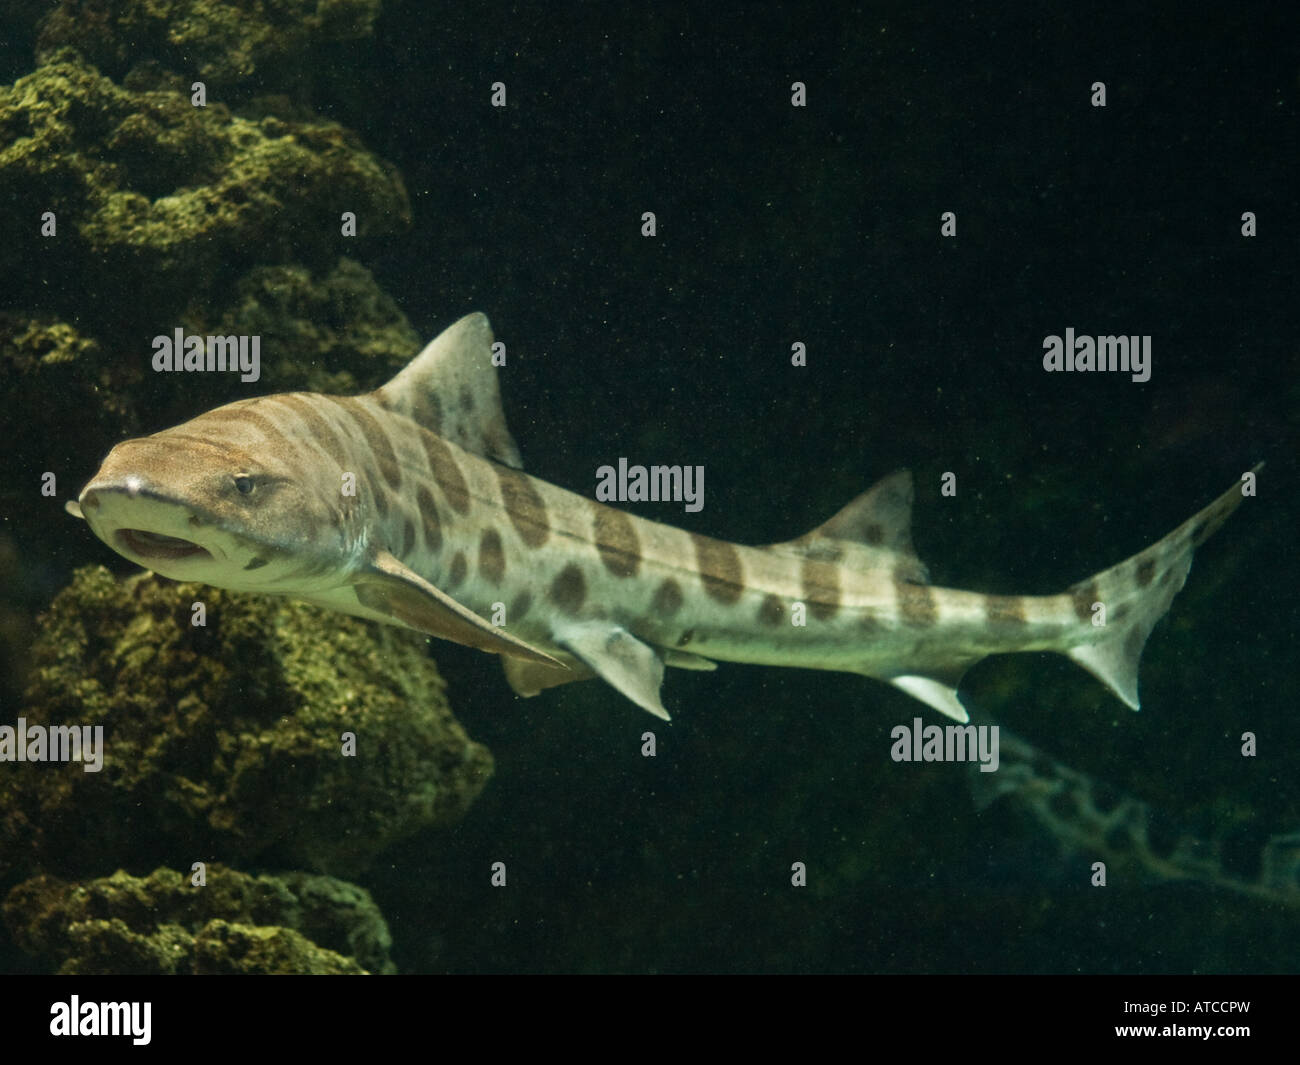 Na-na ... na-na ... na-na ... insérer ici musique requins effrayants pour ce requin léopard. Banque D'Images